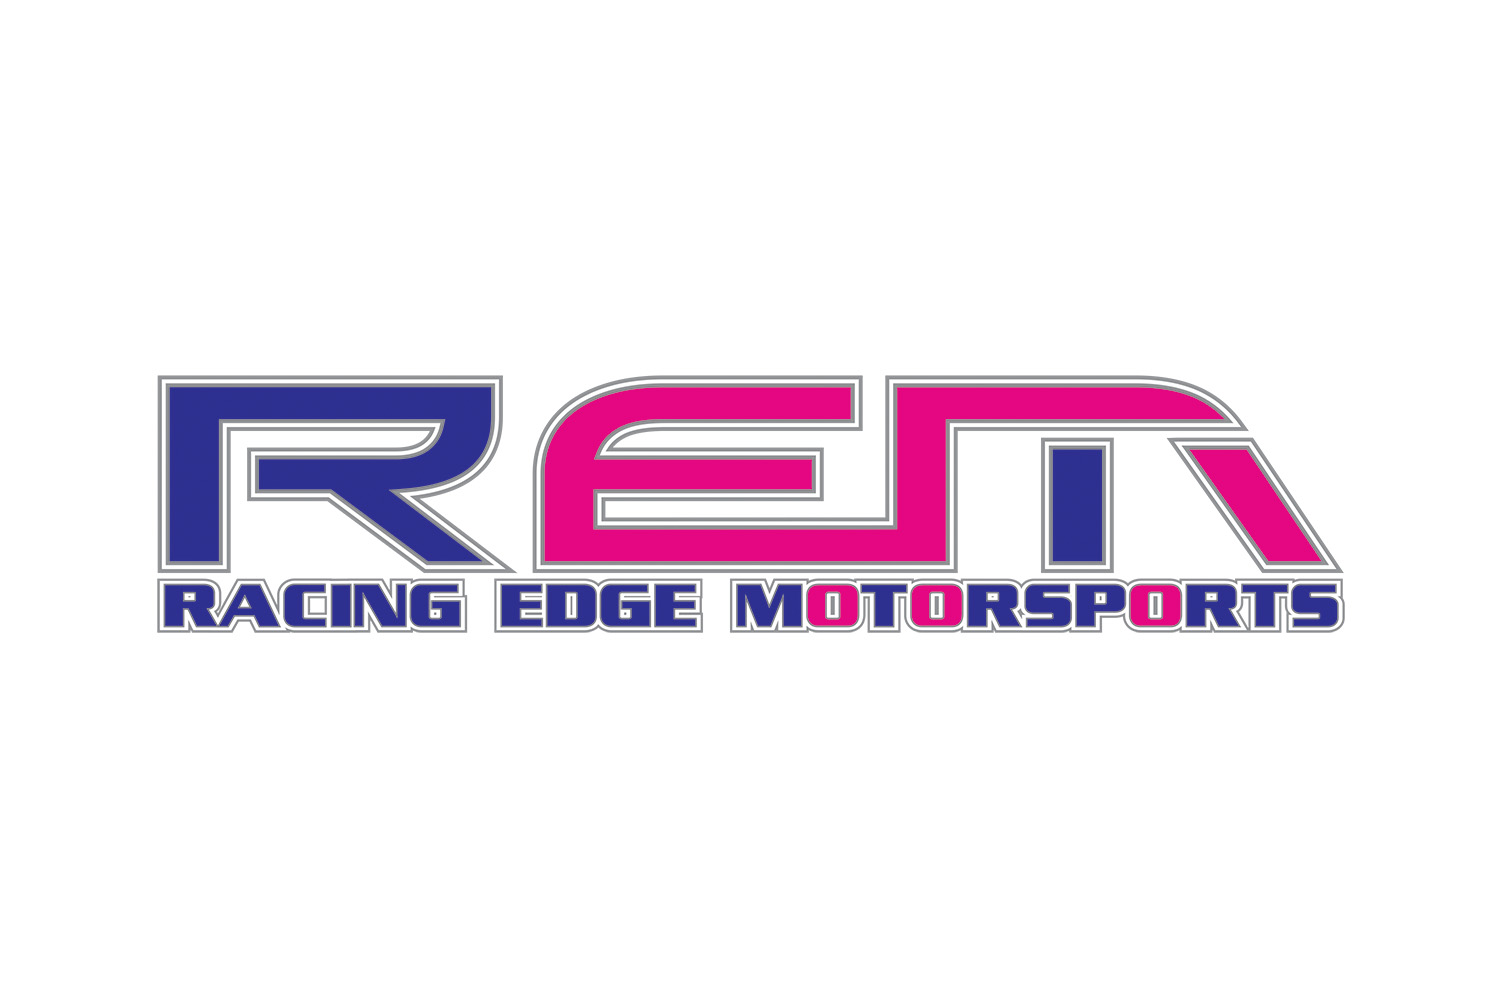 The edge motorsports